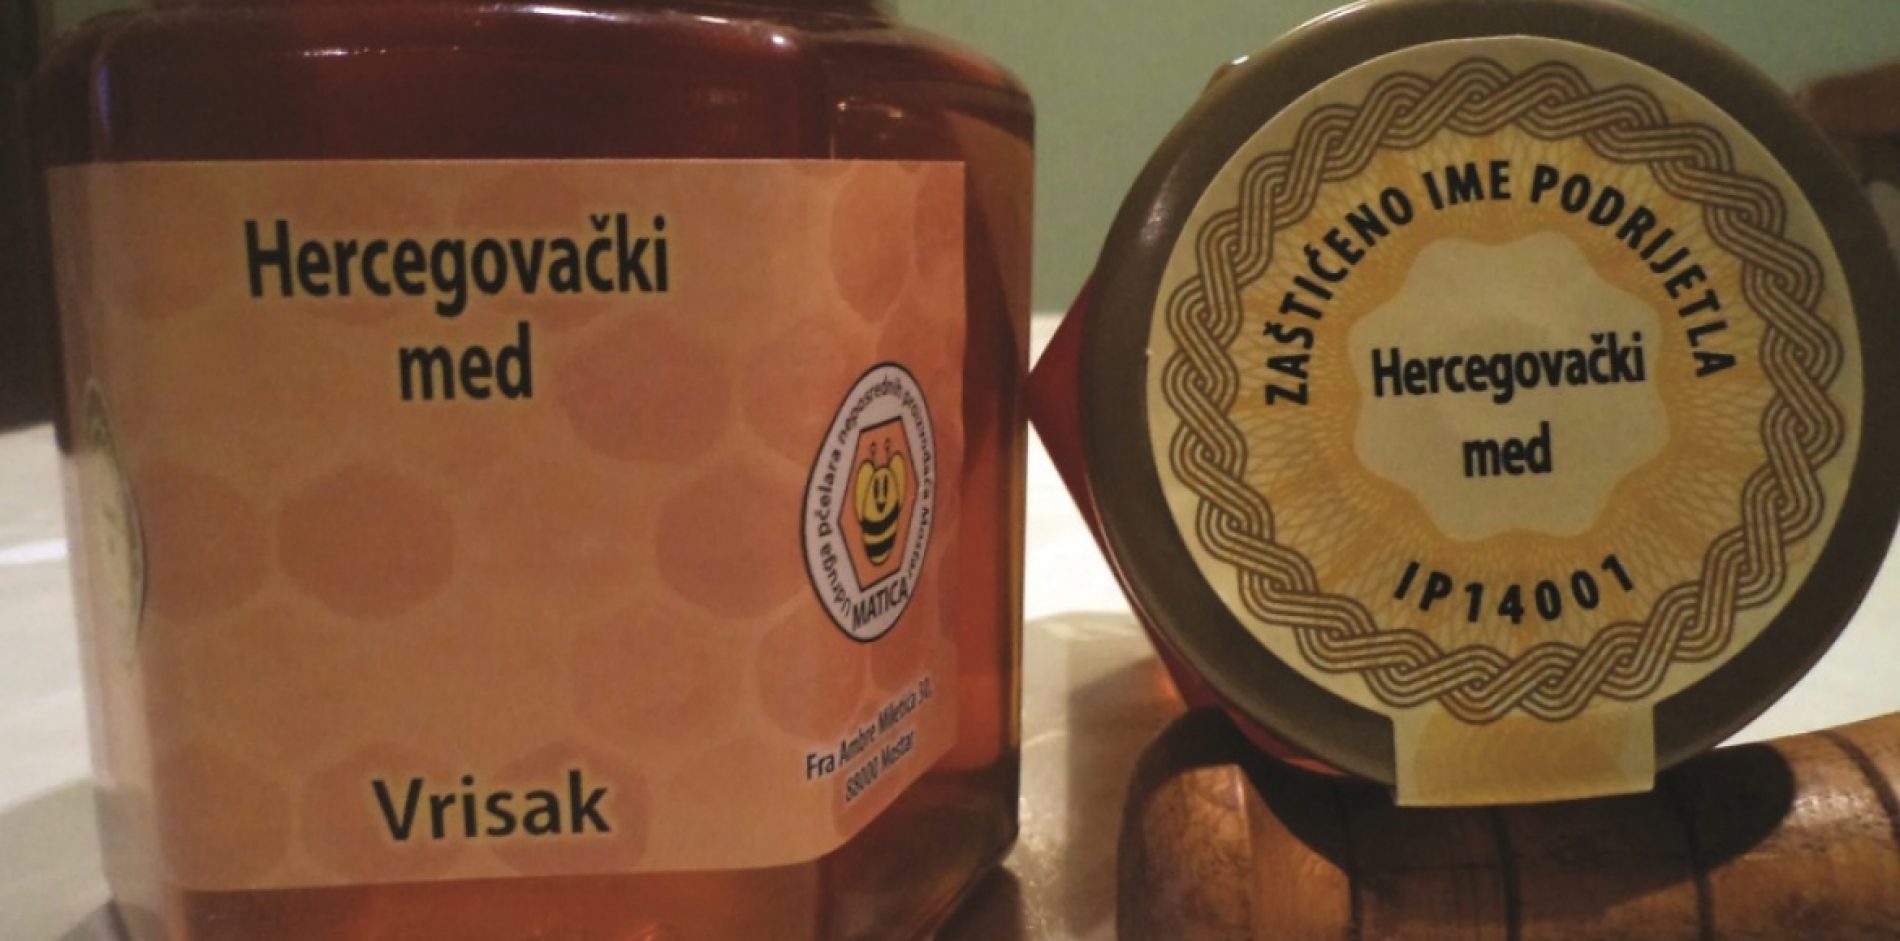 Nakon meda iz Cazinske krajine, međunarodno certifikovan i med iz Hercegovine!